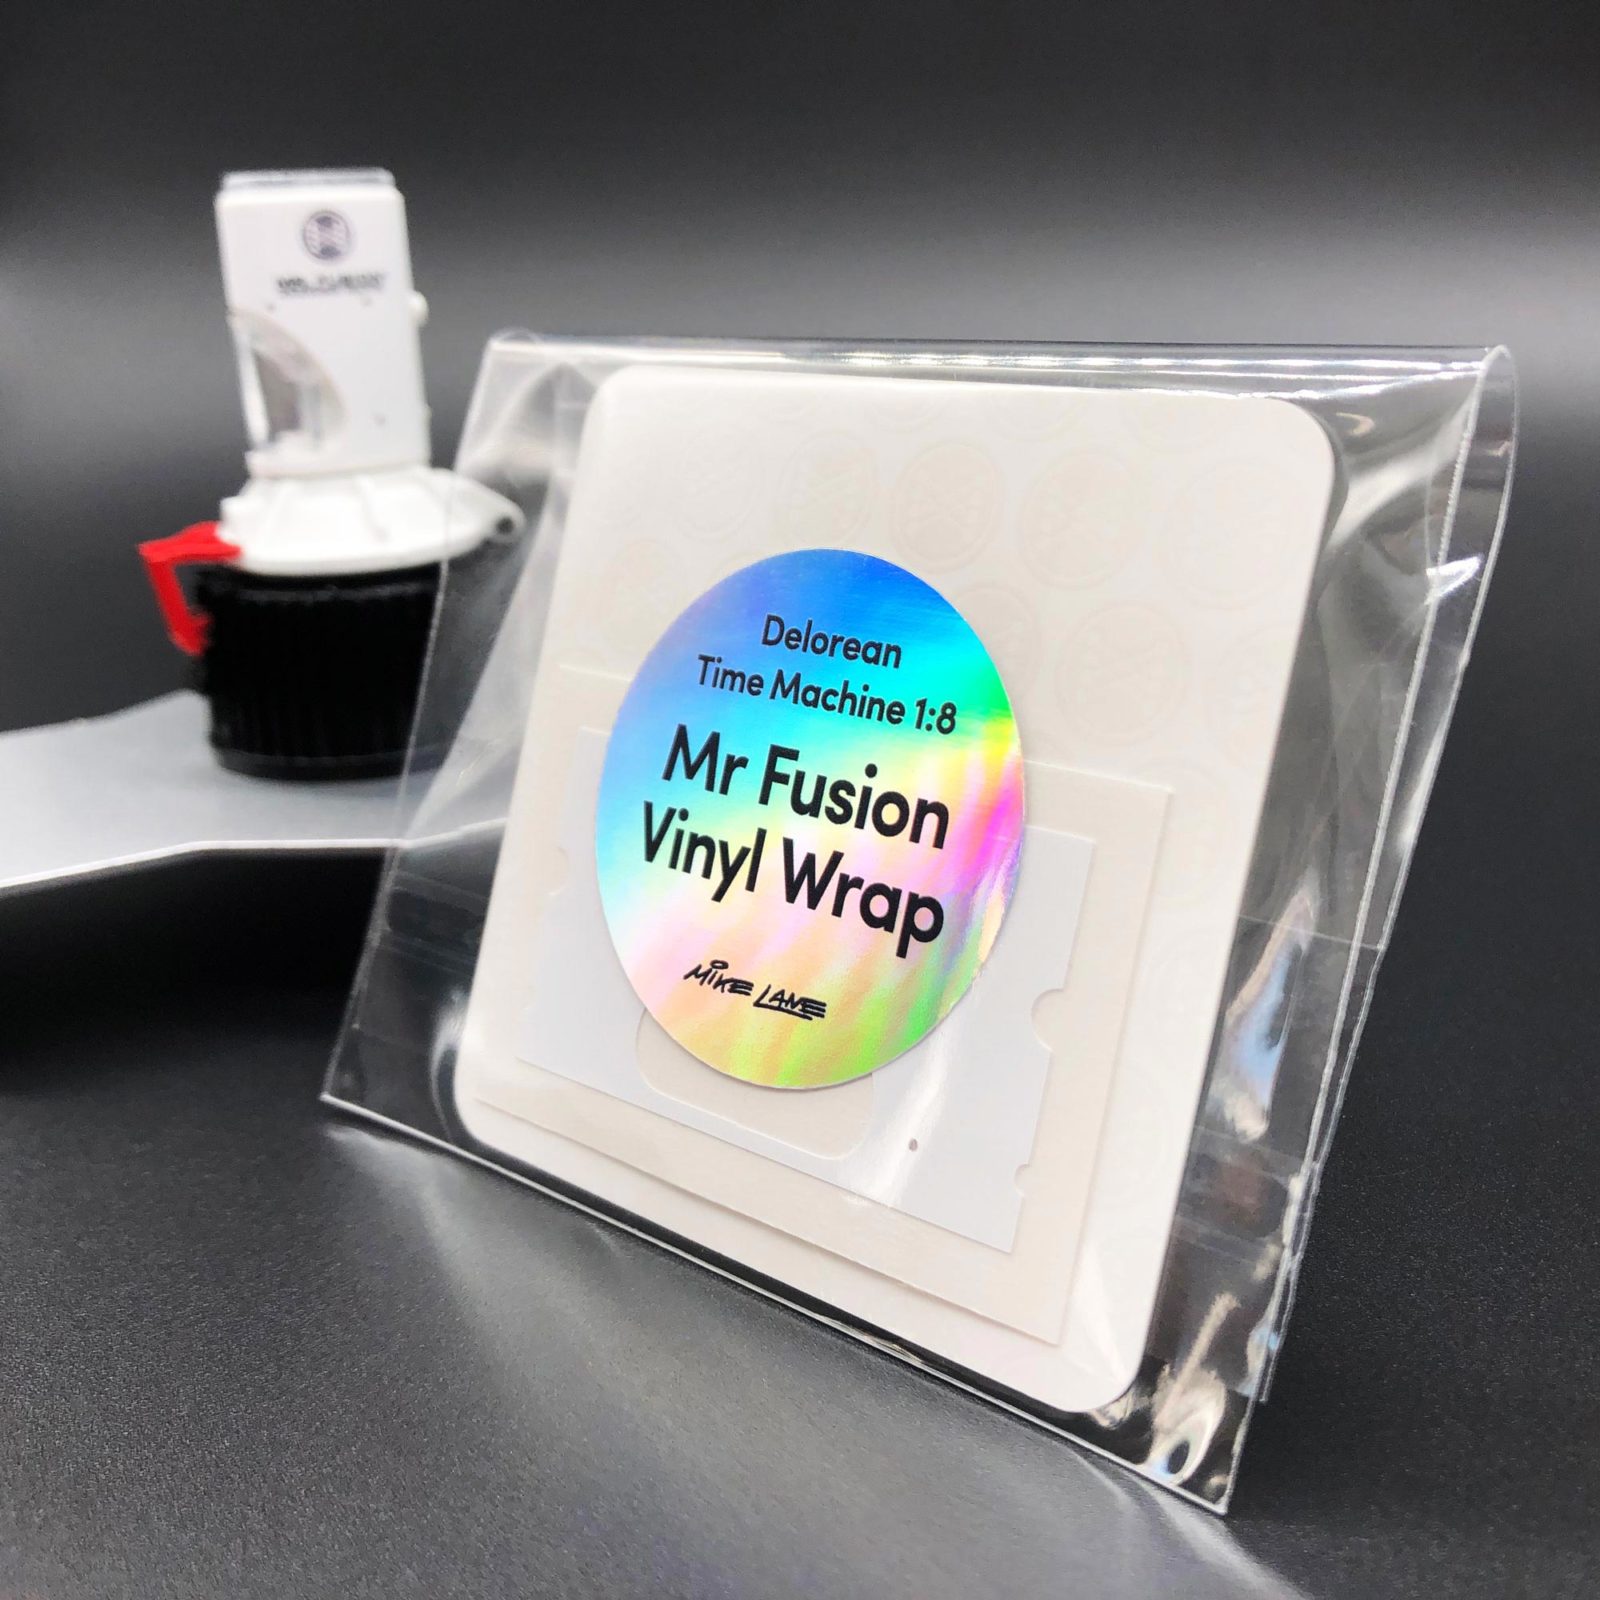 DeLorean Time Machine Mr Fusion Vinyl Wrap packaged